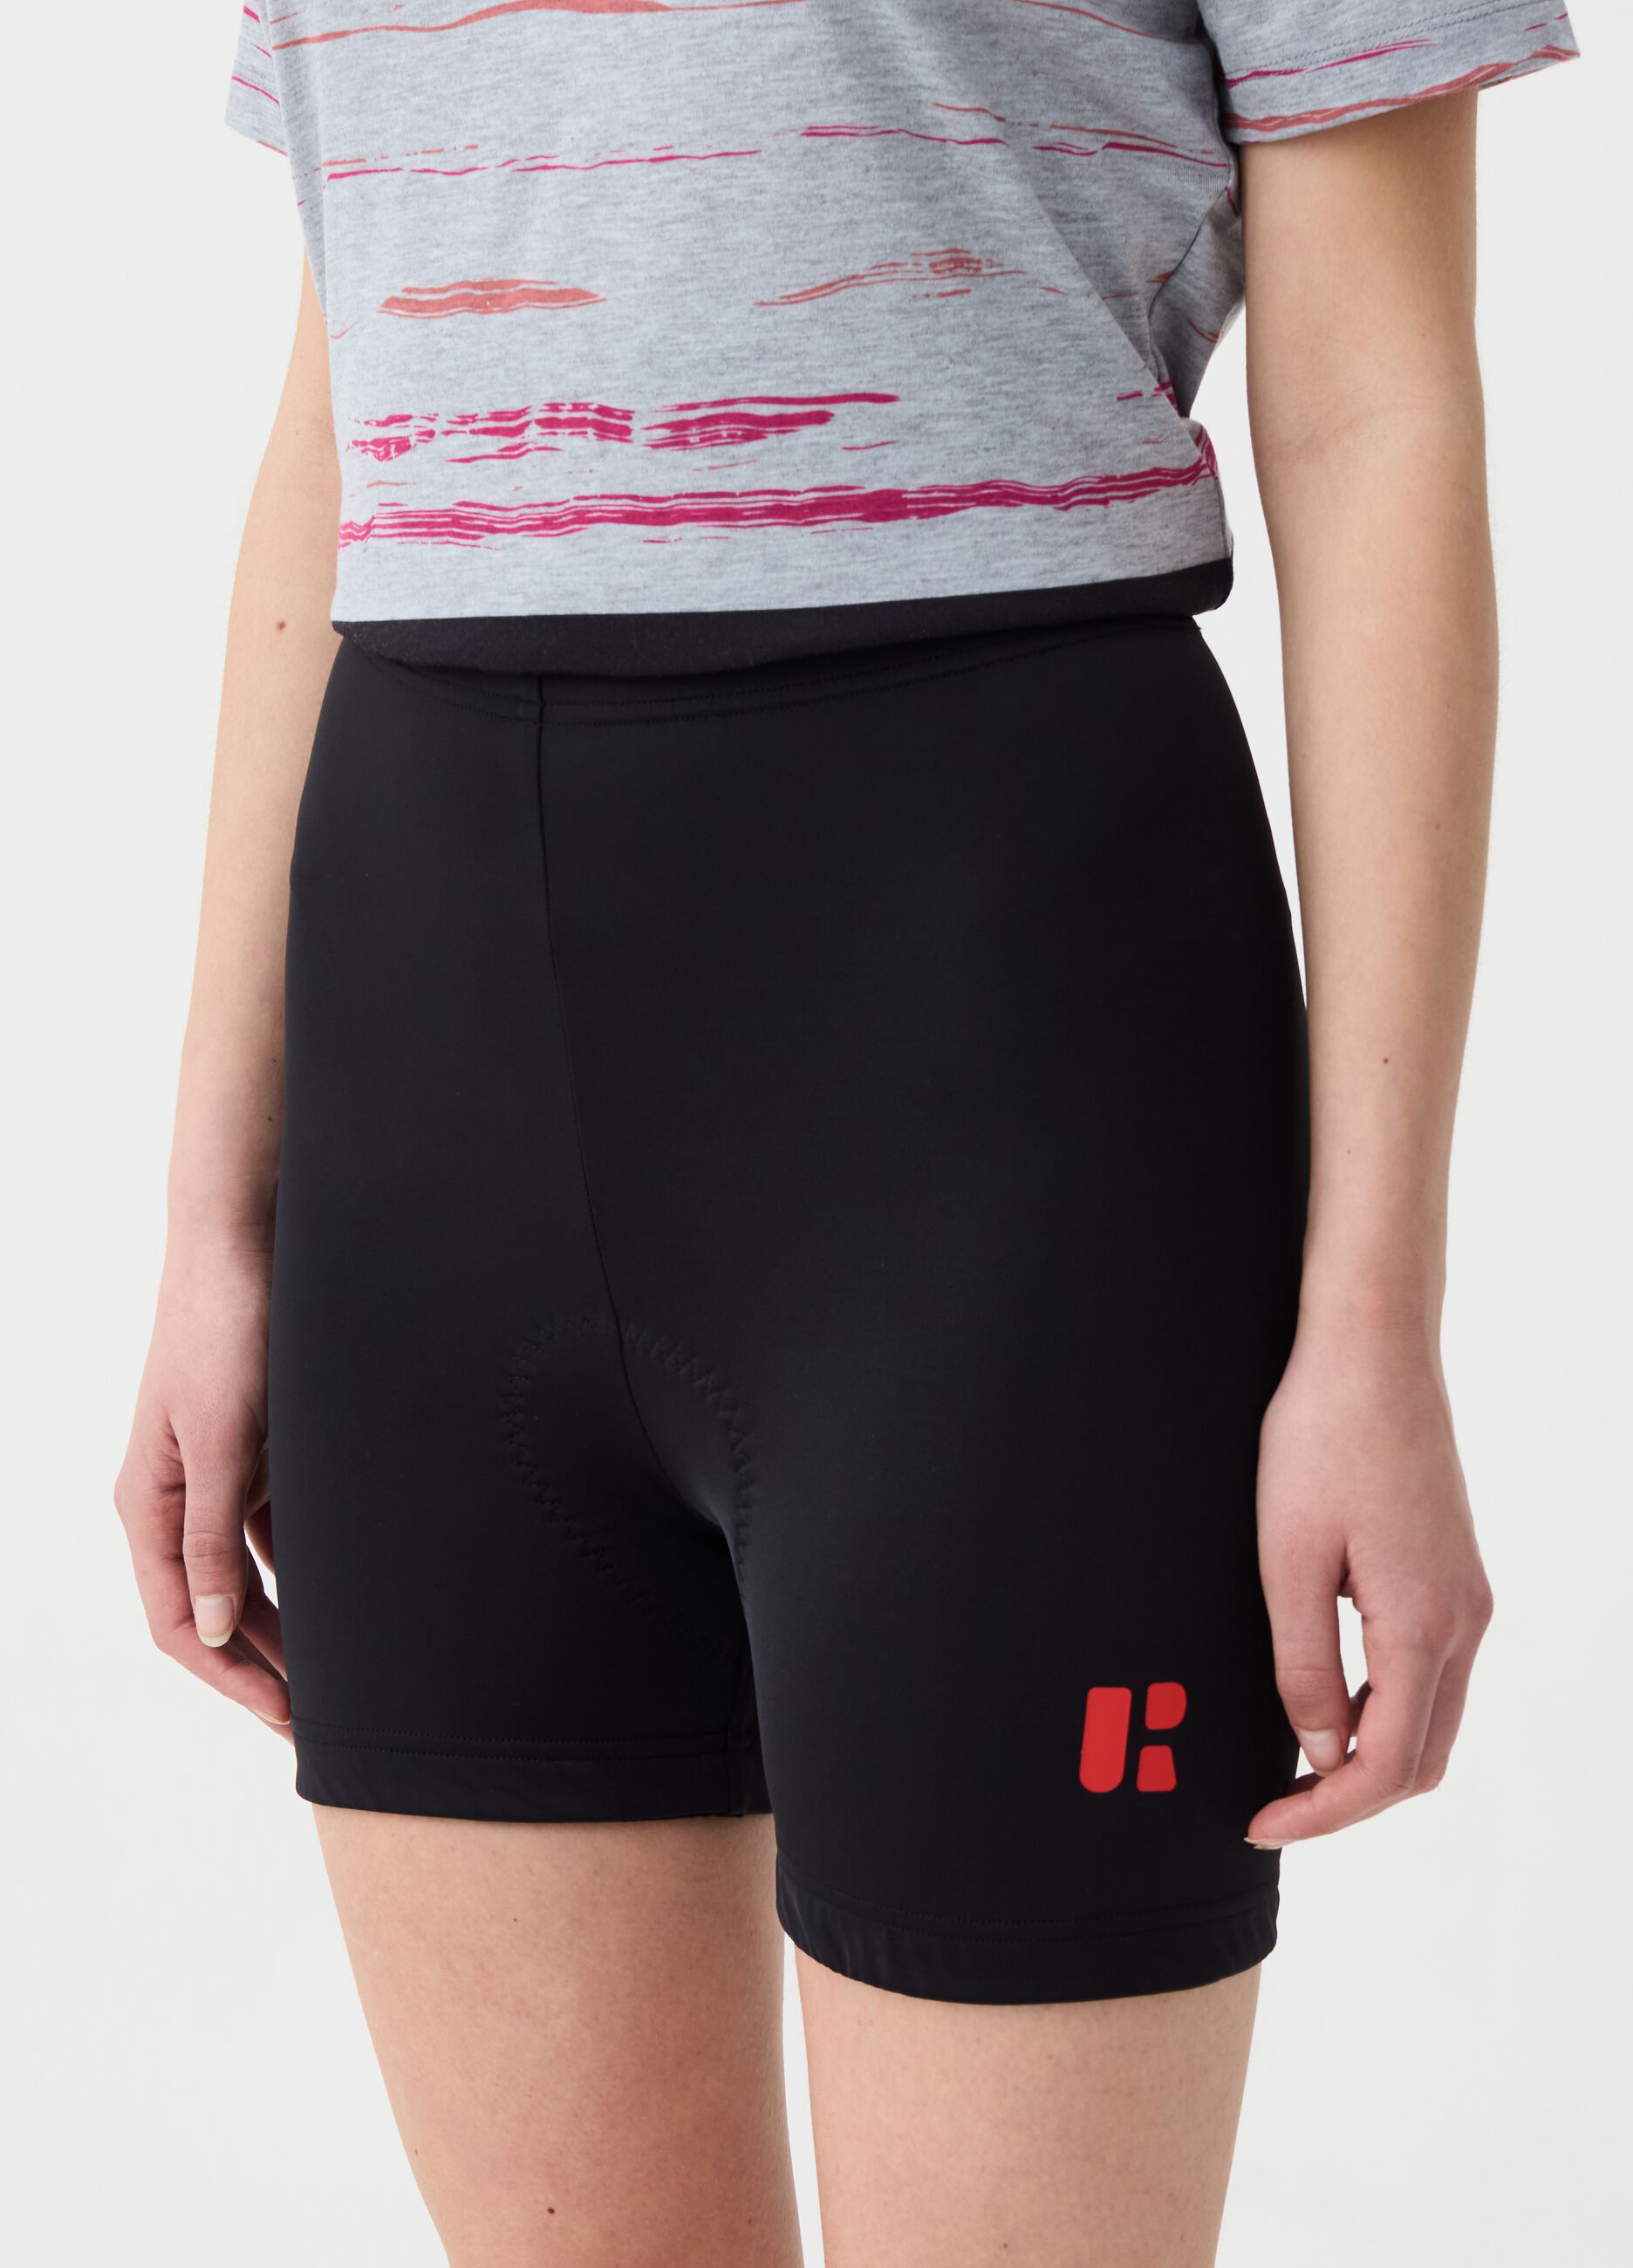 Urban Riders cycle shorts with pad